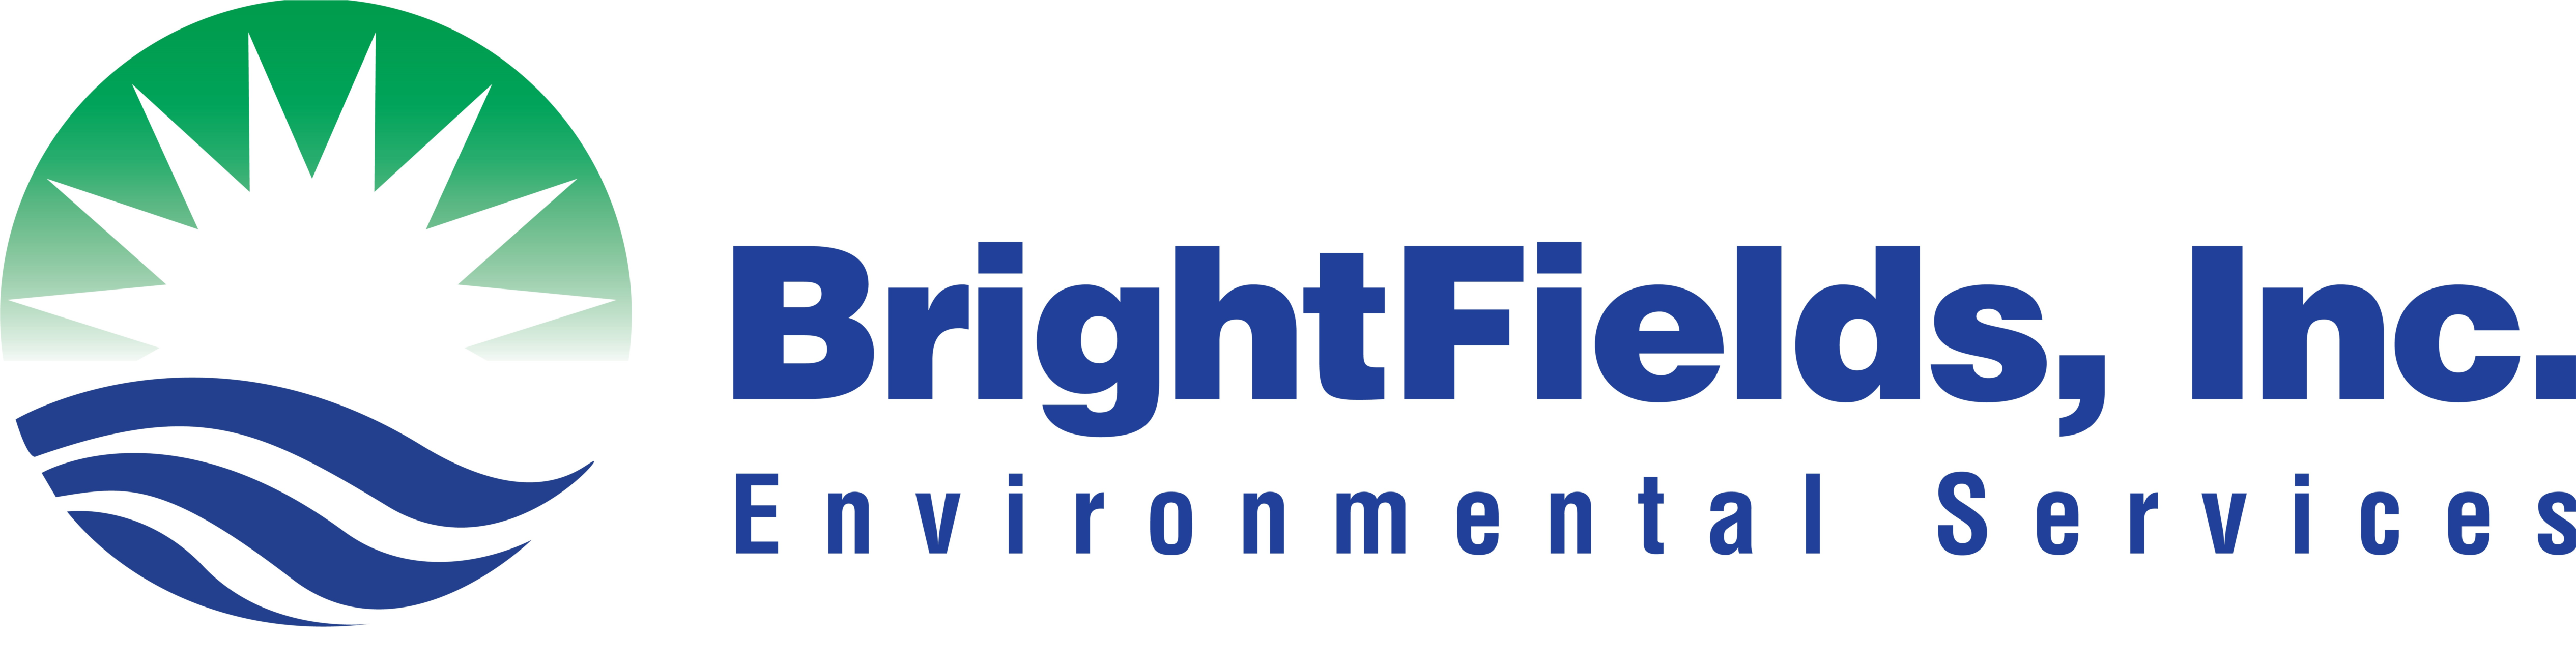 BrightFields, Inc. Company Logo